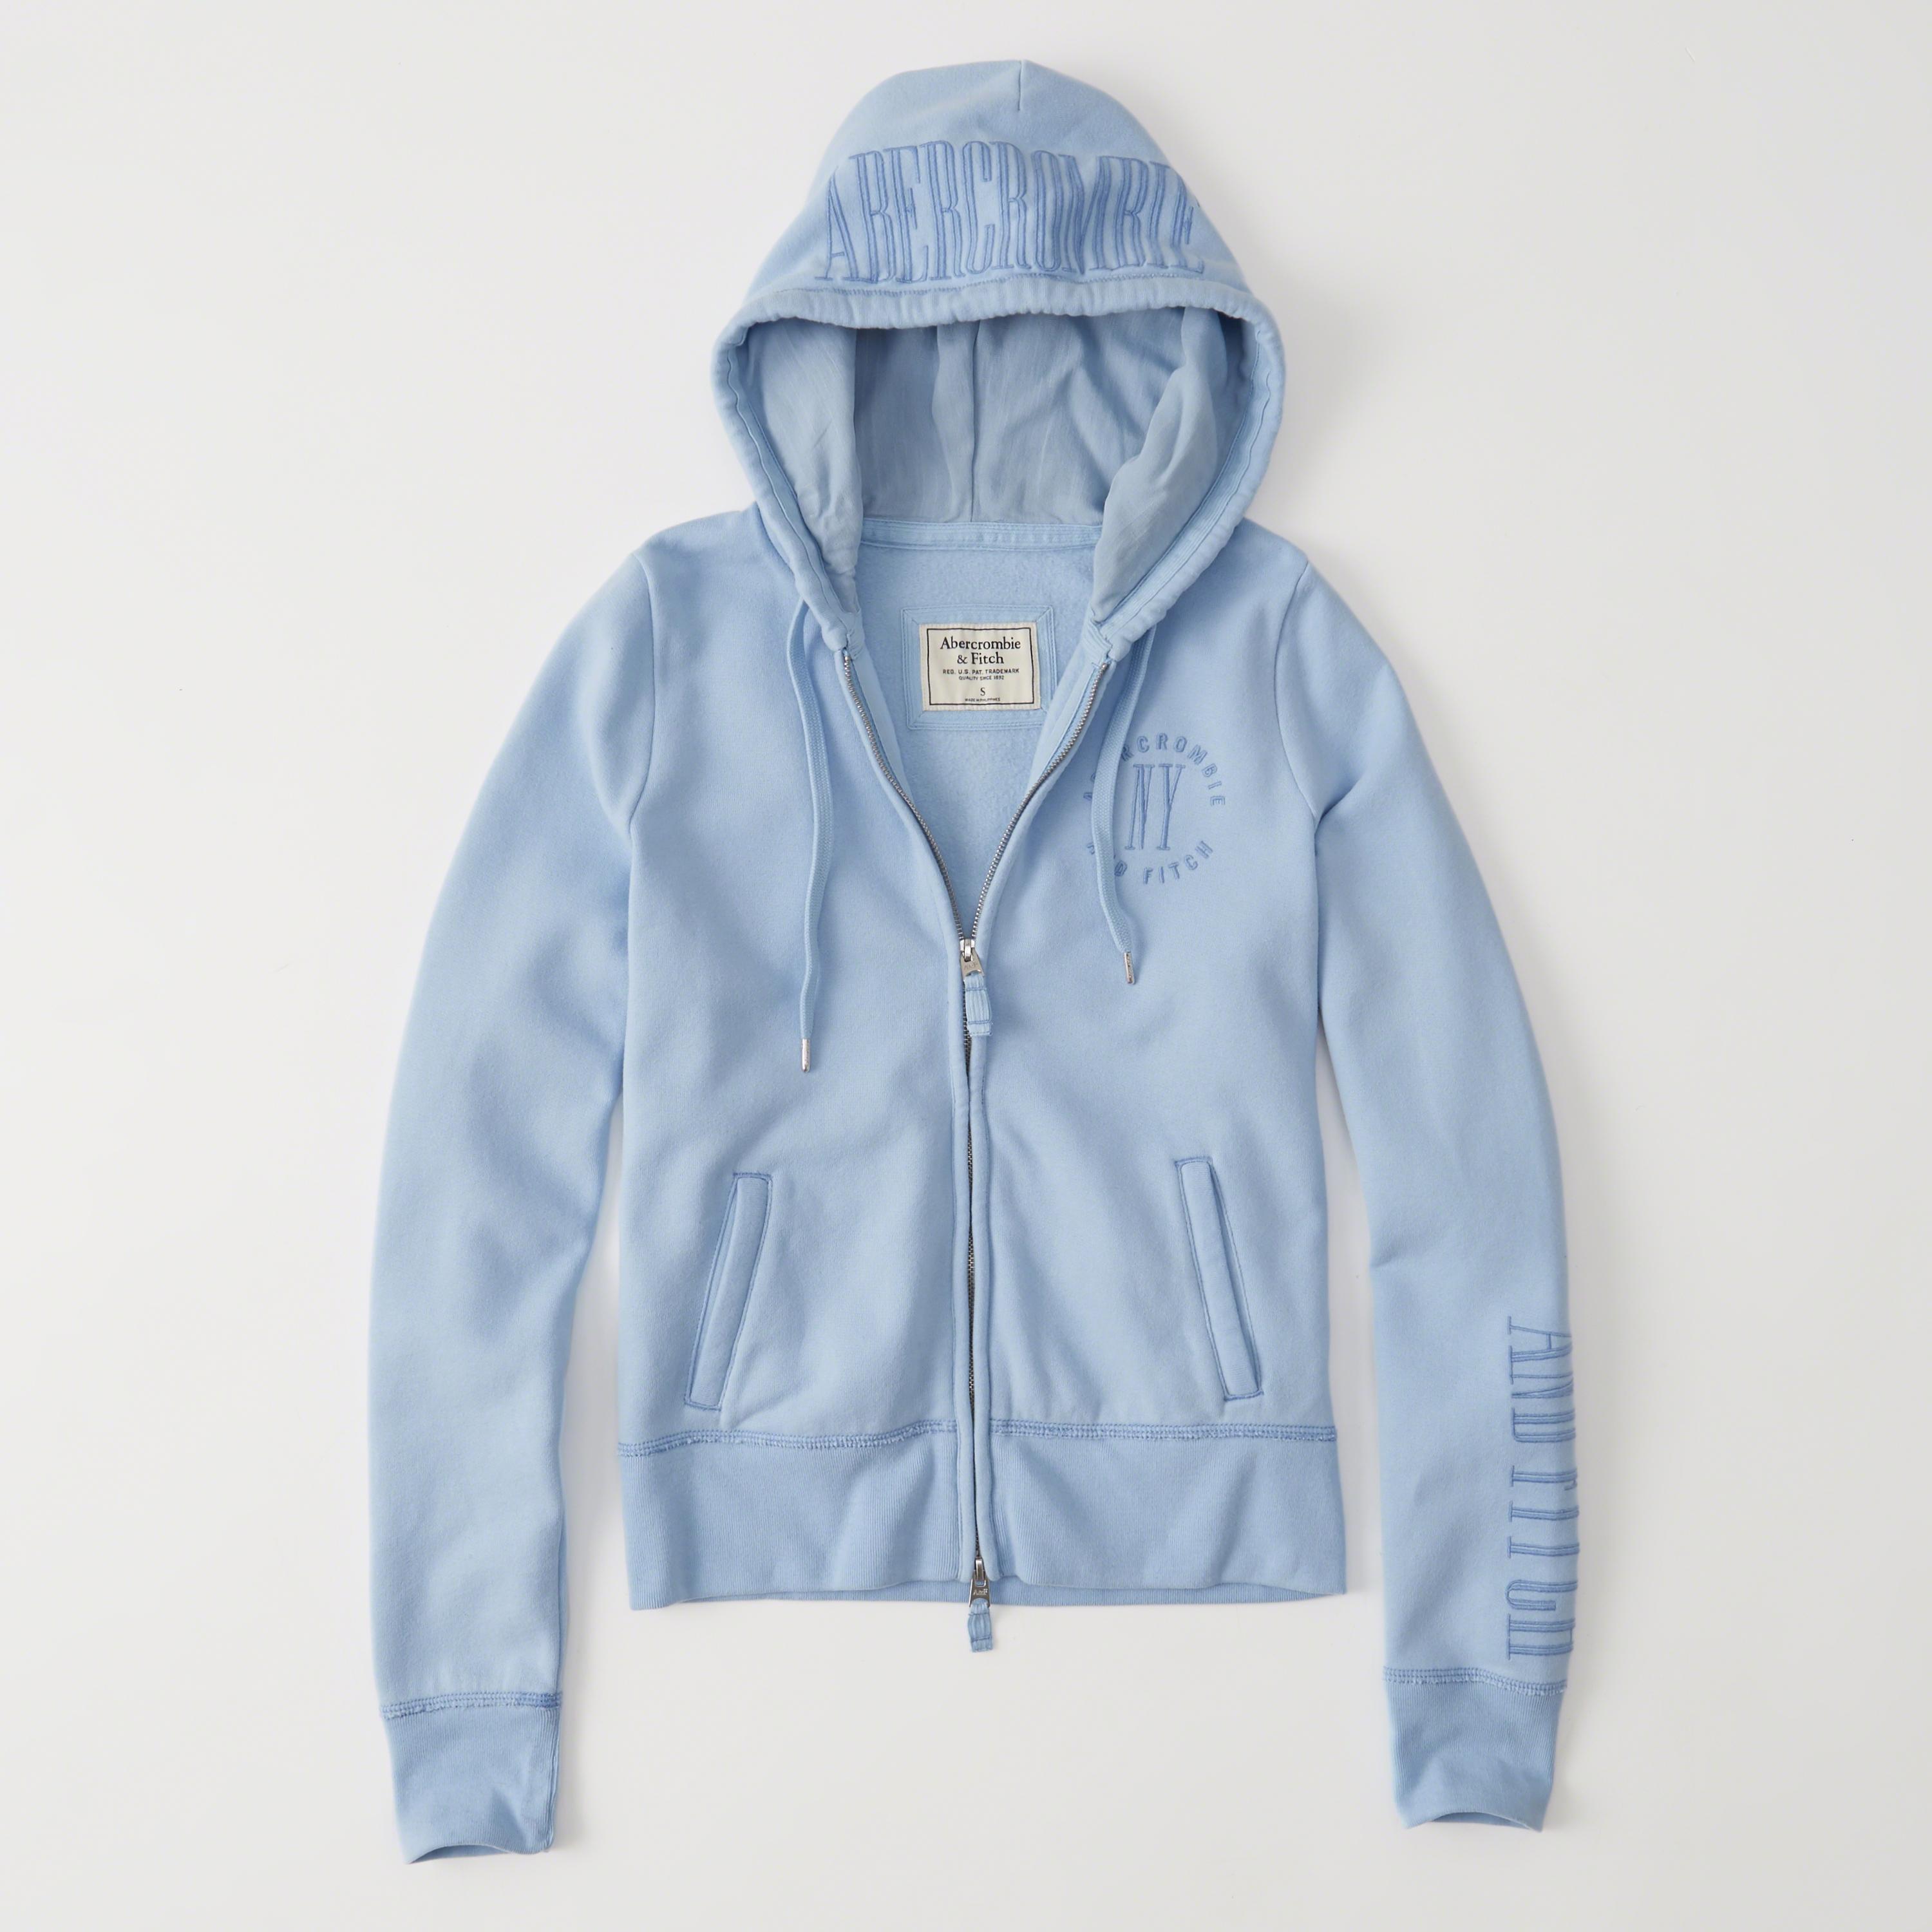 Abercrombie & fitch Full-zip Fleece Hoodie in Blue - Save 61% | Lyst